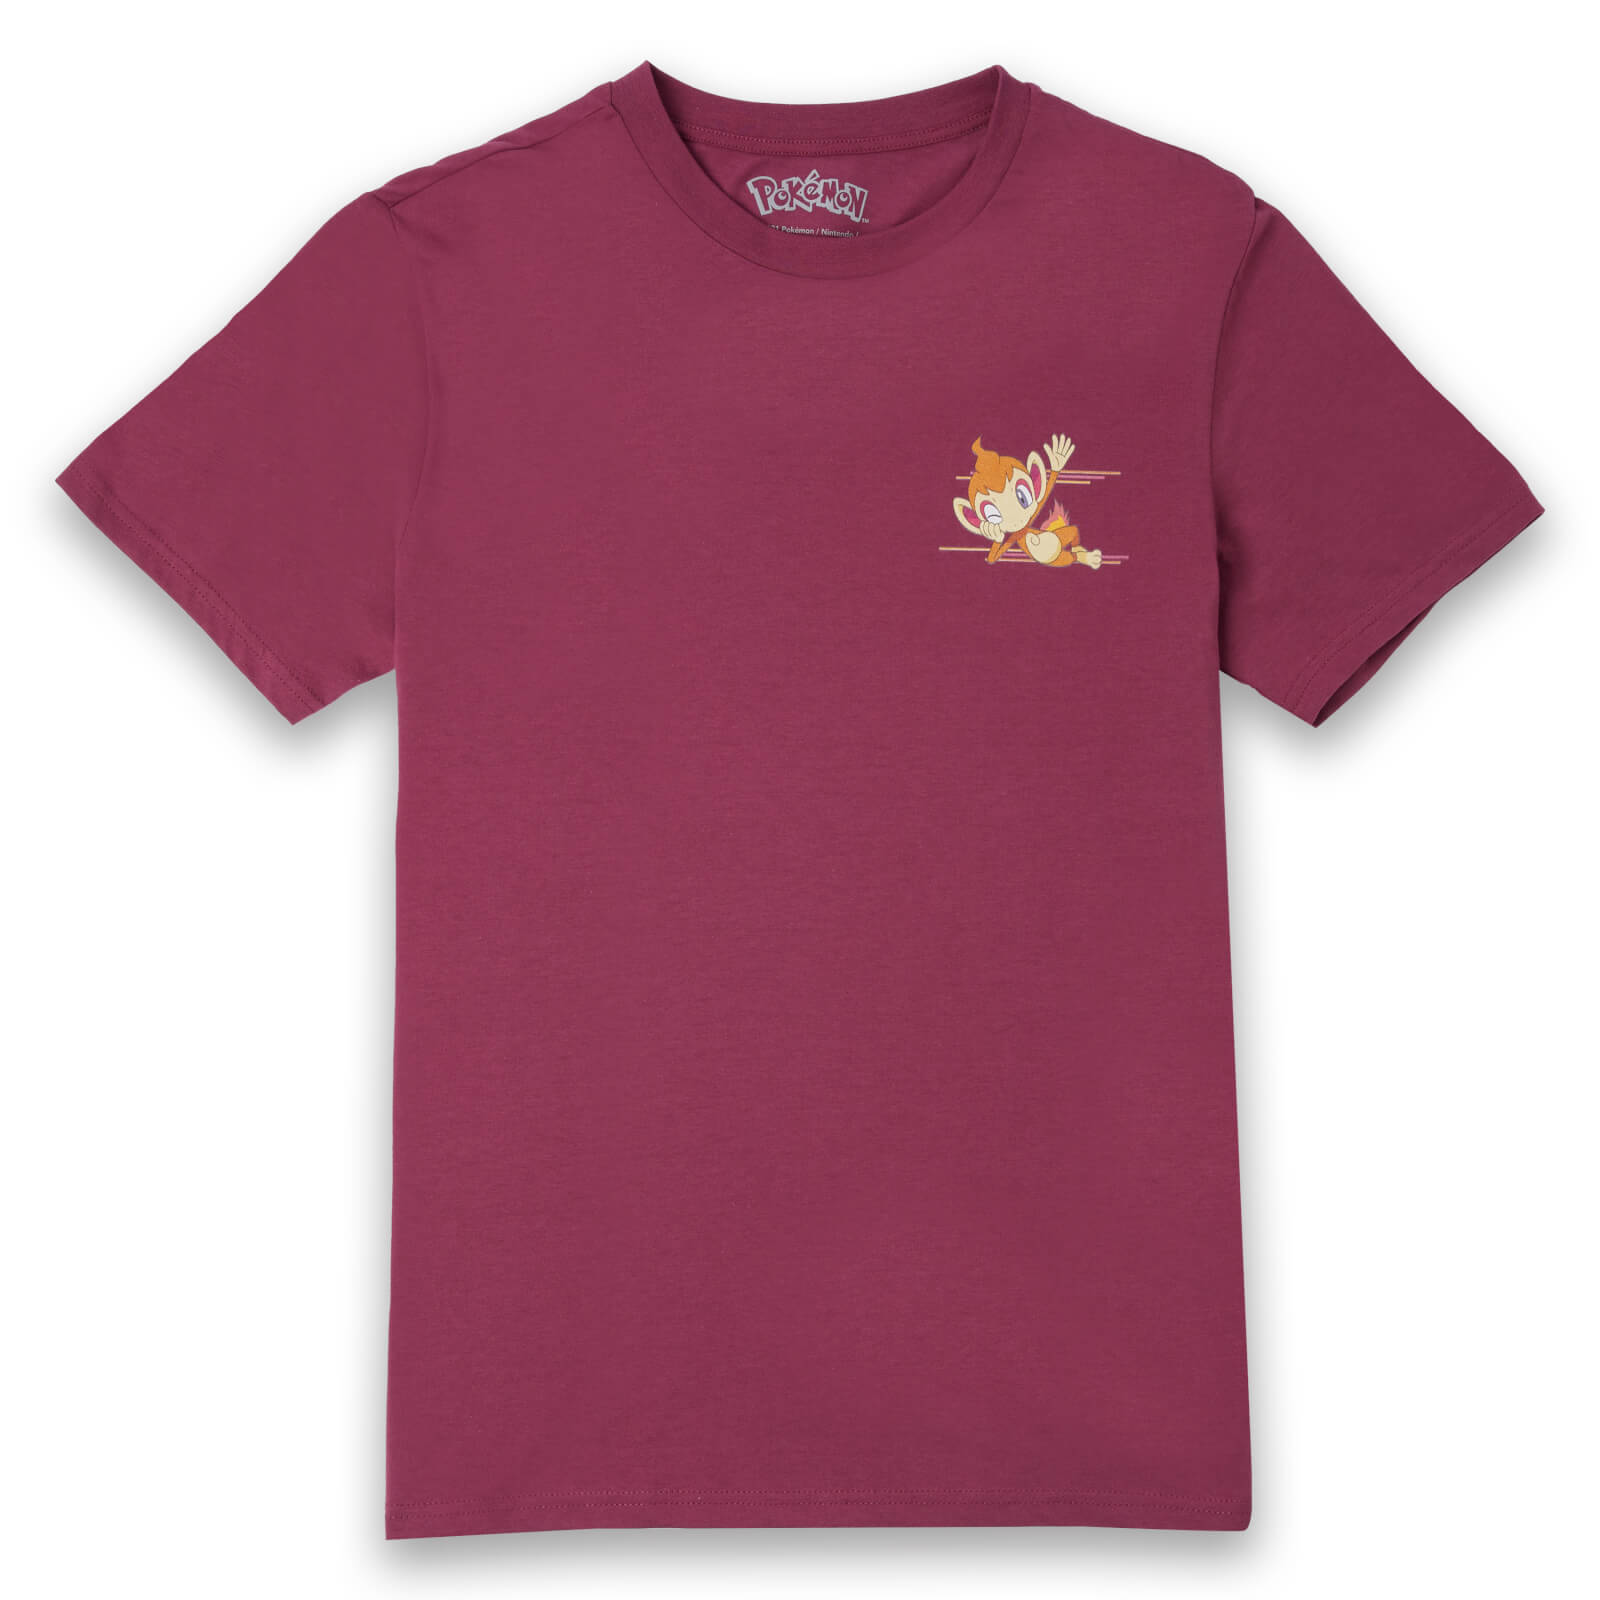 Pokémon Chimchar Unisex T-Shirt - Burgundy - XS - Burgundy